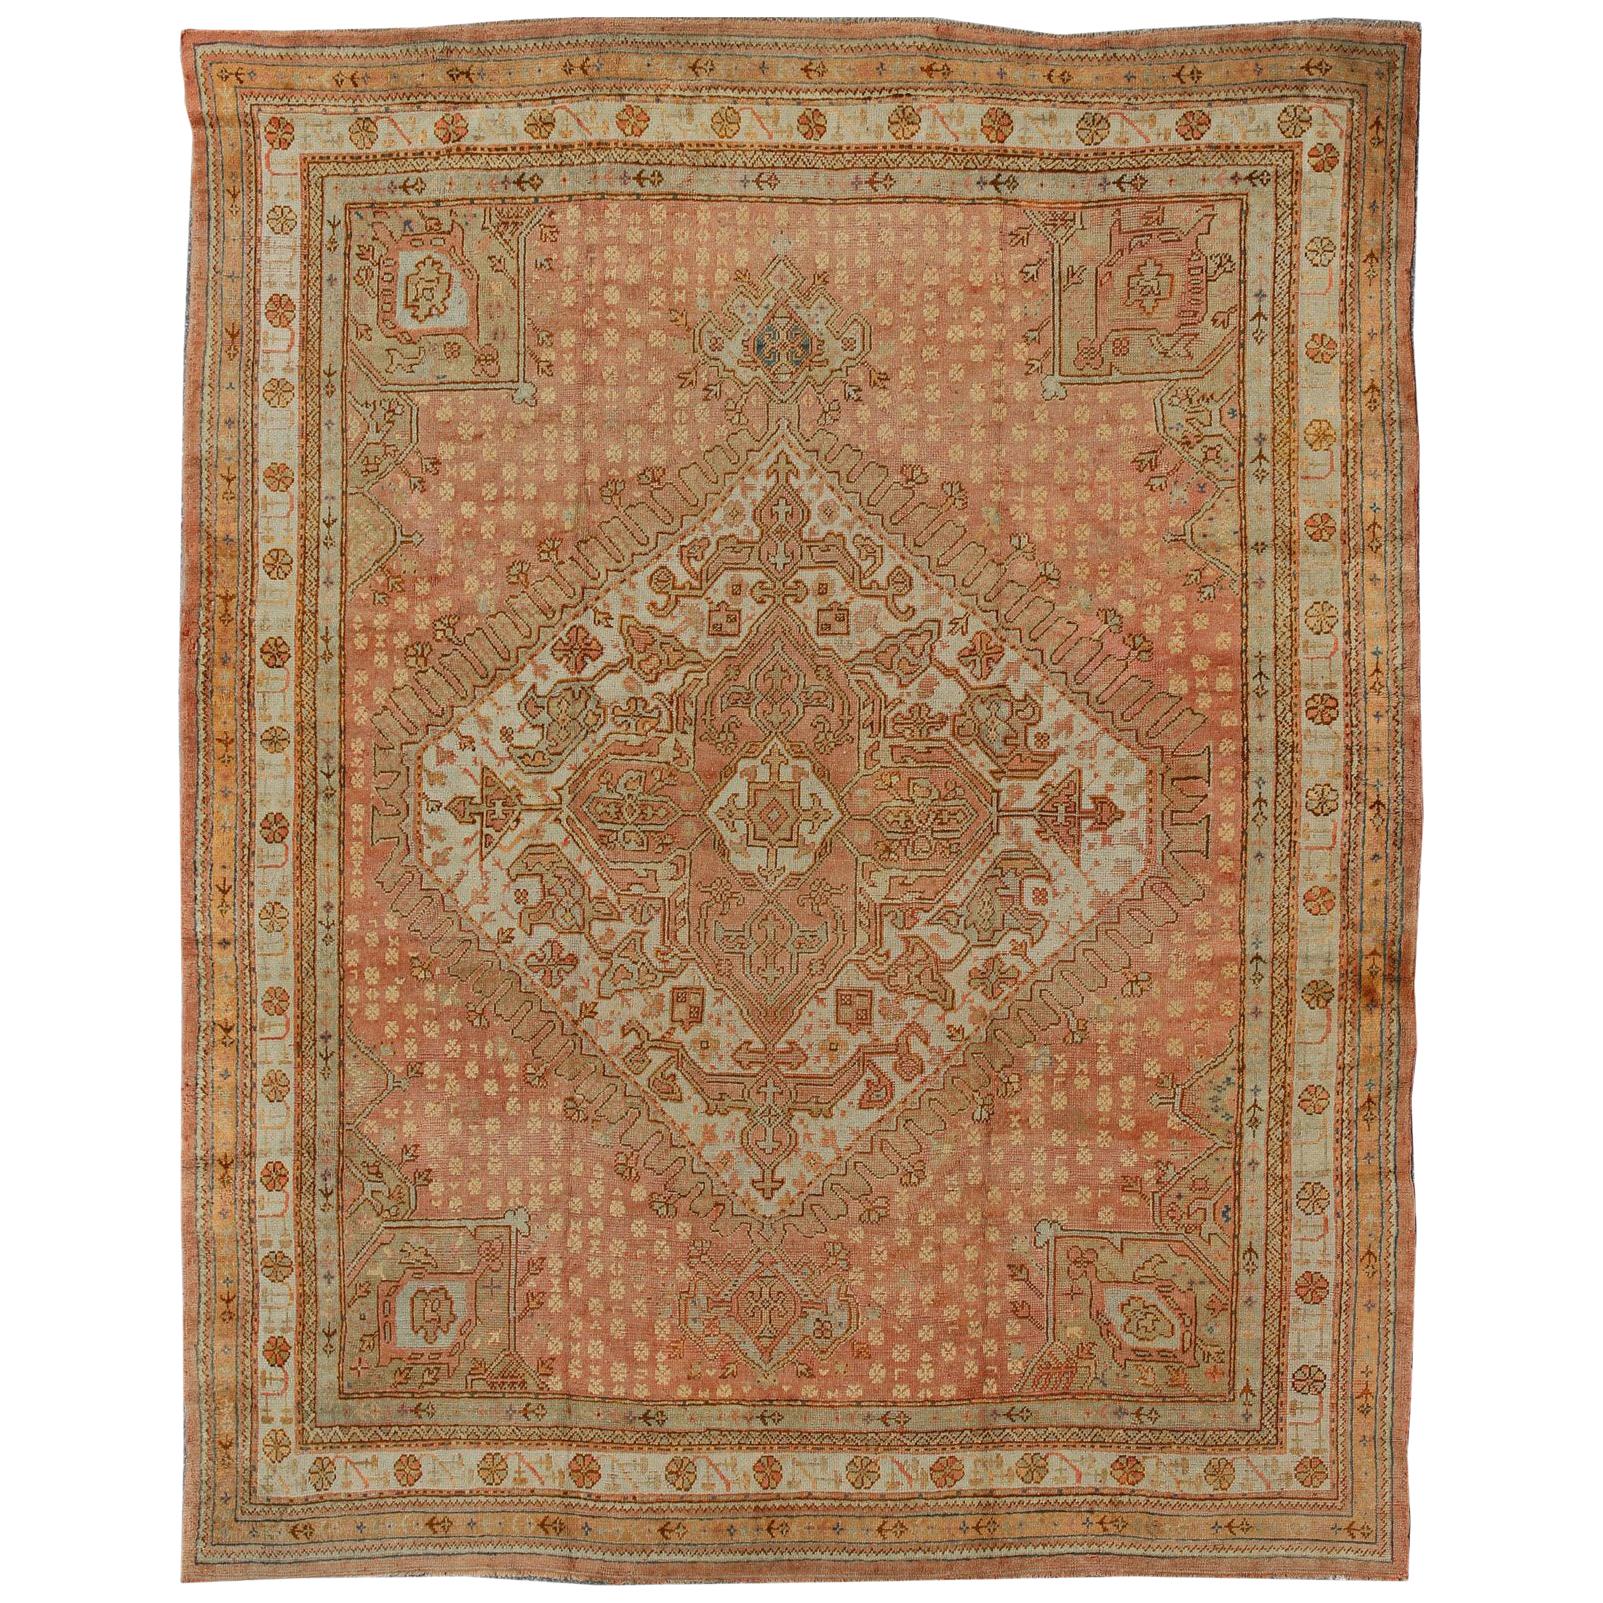 Antique Turkish Oushak rug with geometric medallion in Salmon background. Keivan Woven Arts / VR-7884 / country of origin / type: Turkey / Oushak, circa Early-20th century. Antique squared size Oushak
Measures: 11'6 x 13'1.
This gorgeous carpet